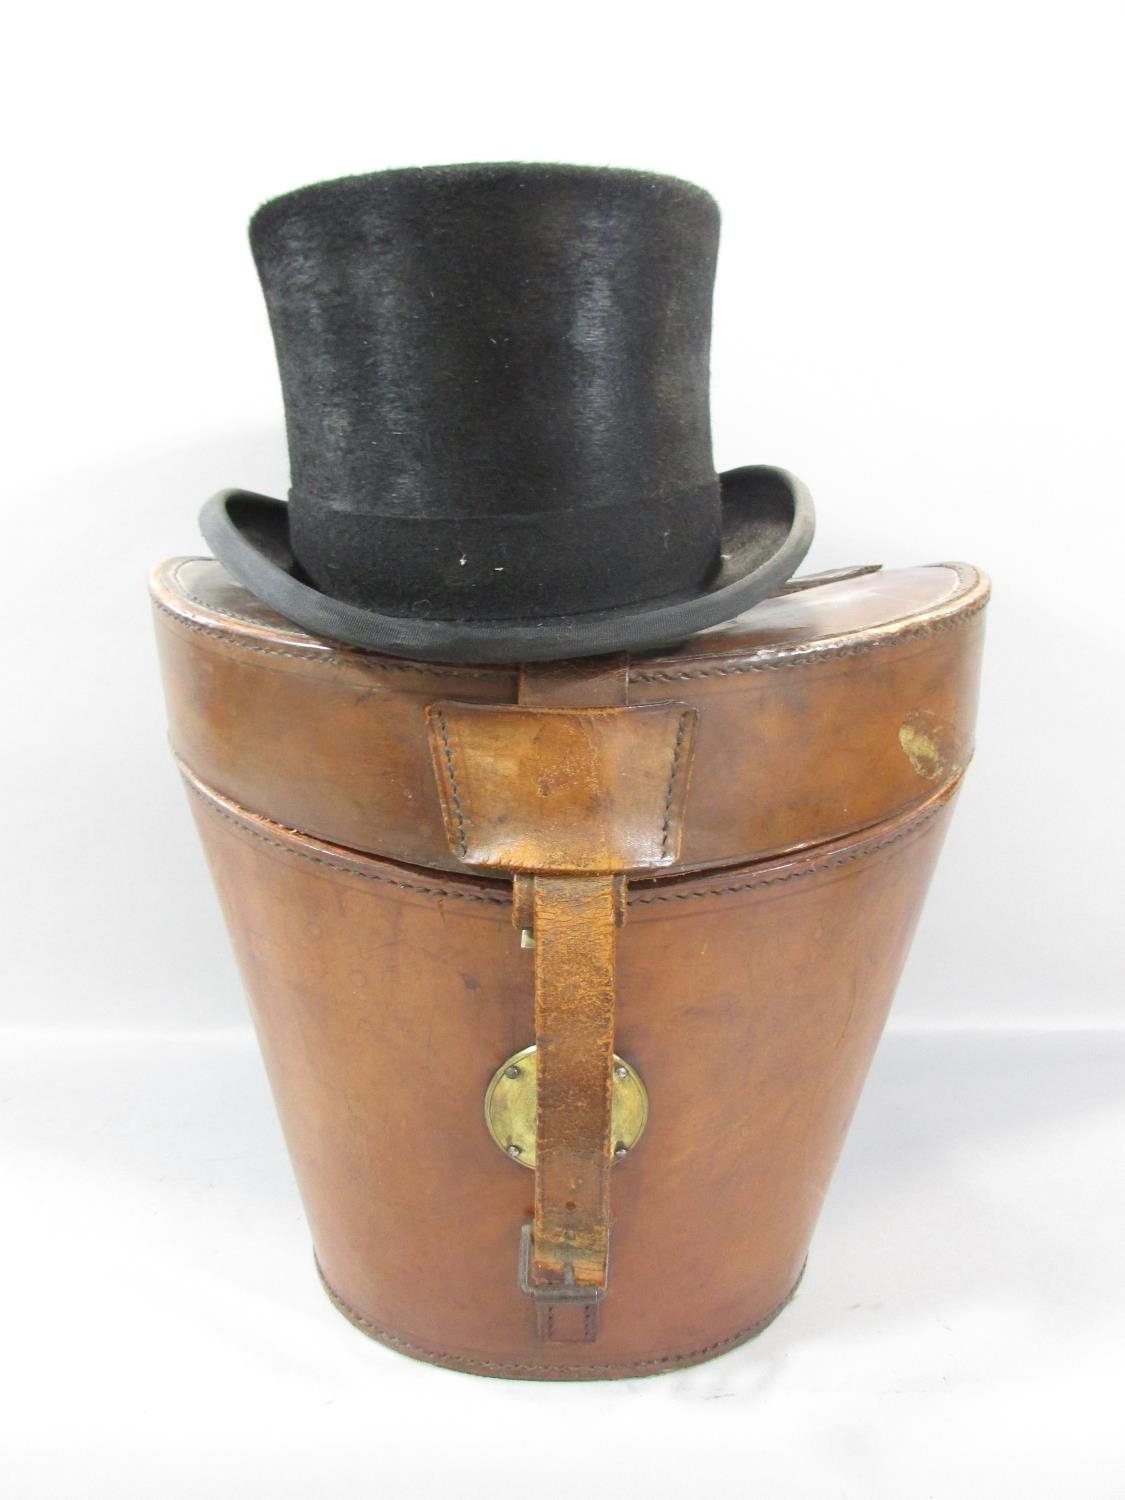 A vintage leather top hat box containing a modern 100% fine fur felt hat size UK 7 1/8 US 7 1/4